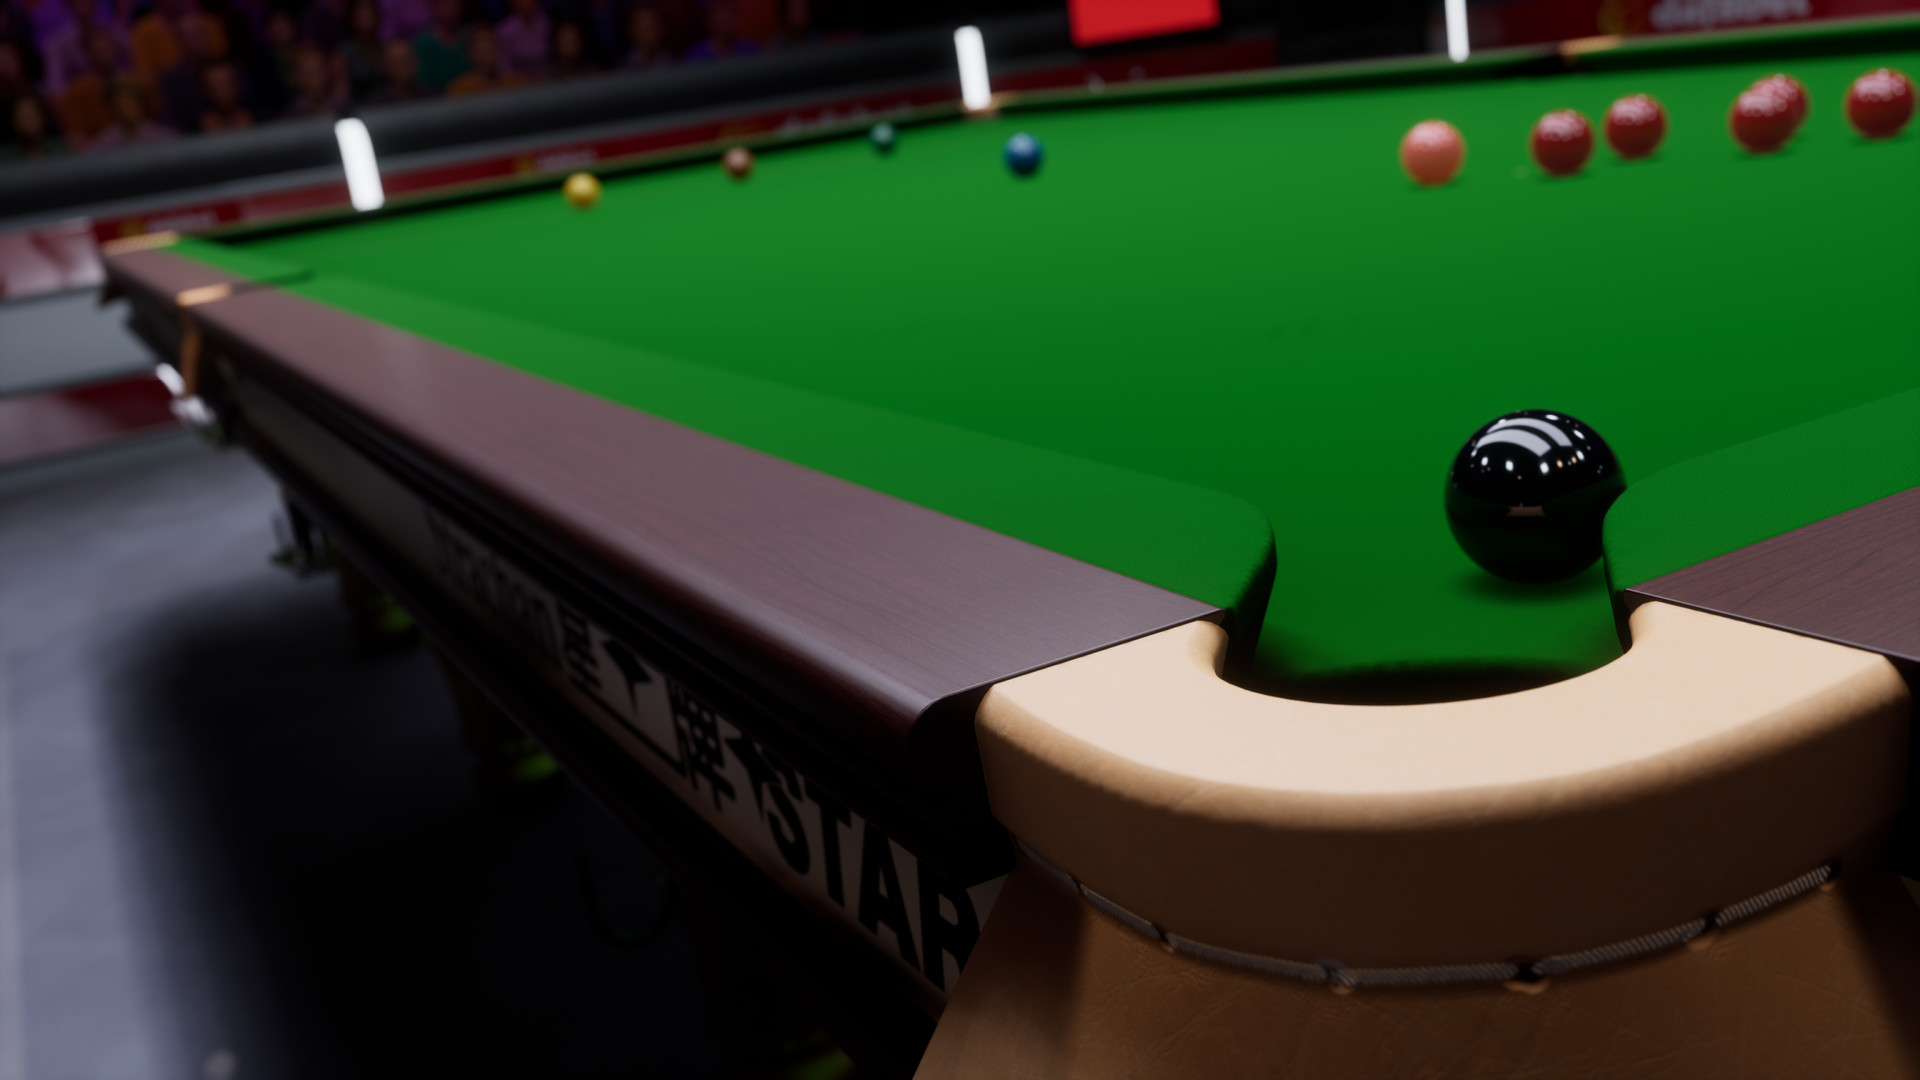 Snooker 19 on Steam